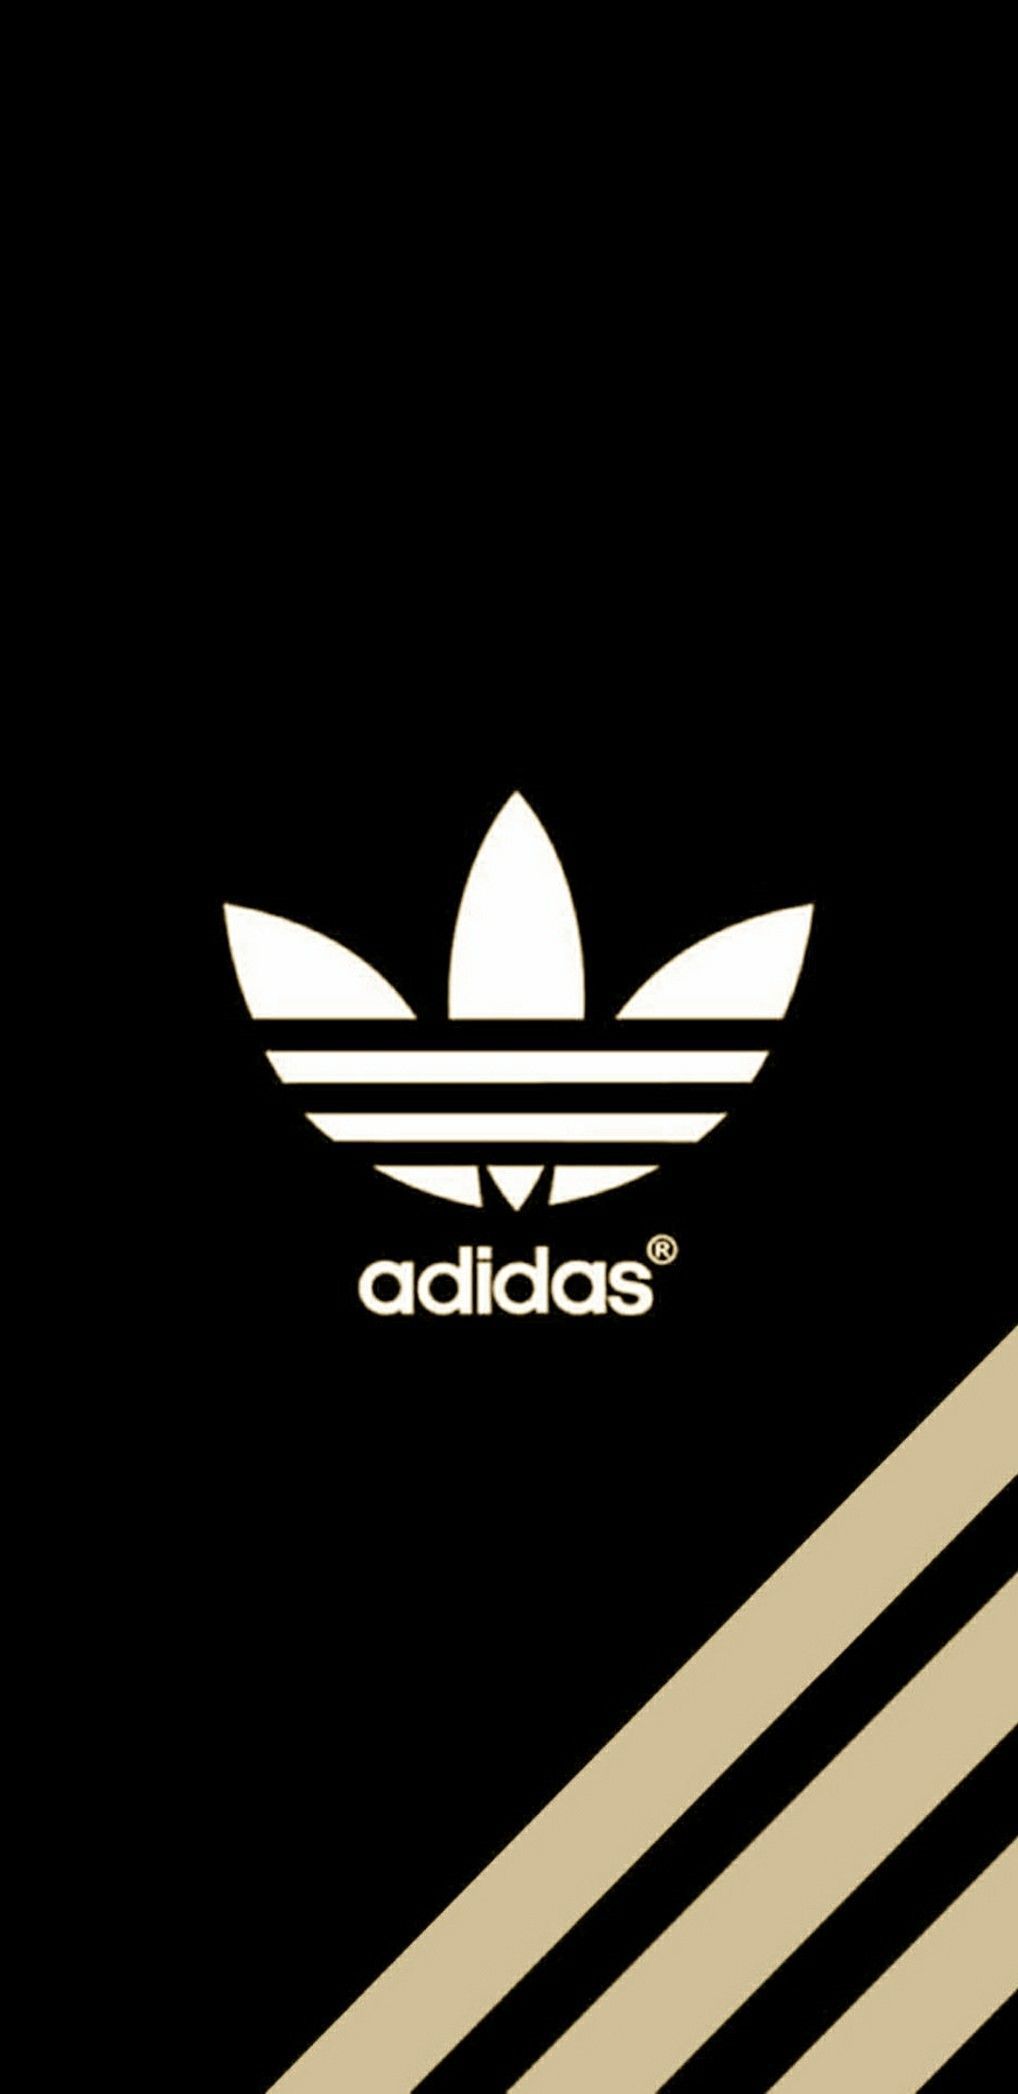 Adidas (Three Stripes) Wallpaper Background